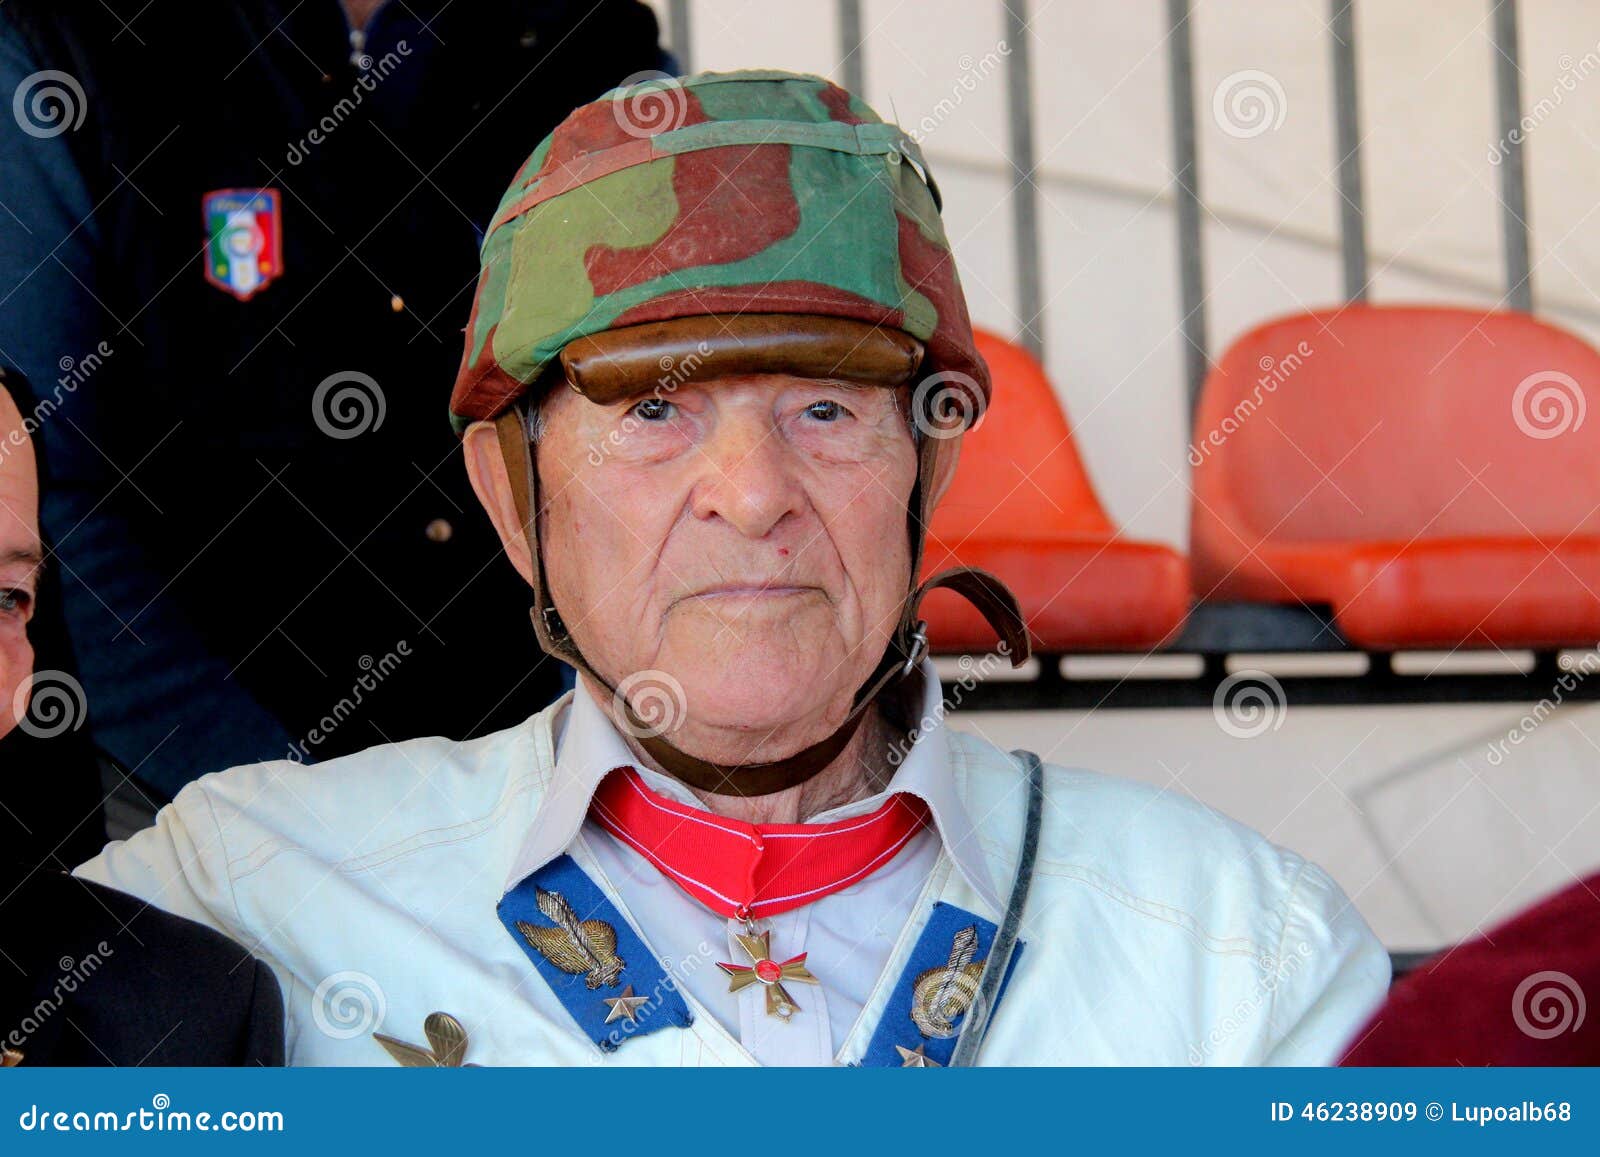 Santo Pelliccia a veteran of the battle of El Alamein Editorial Stock Image - santo-pelliccia-veteran-battle-el-alamein-official-uniform-agen-second-world-war-photographed-46238909